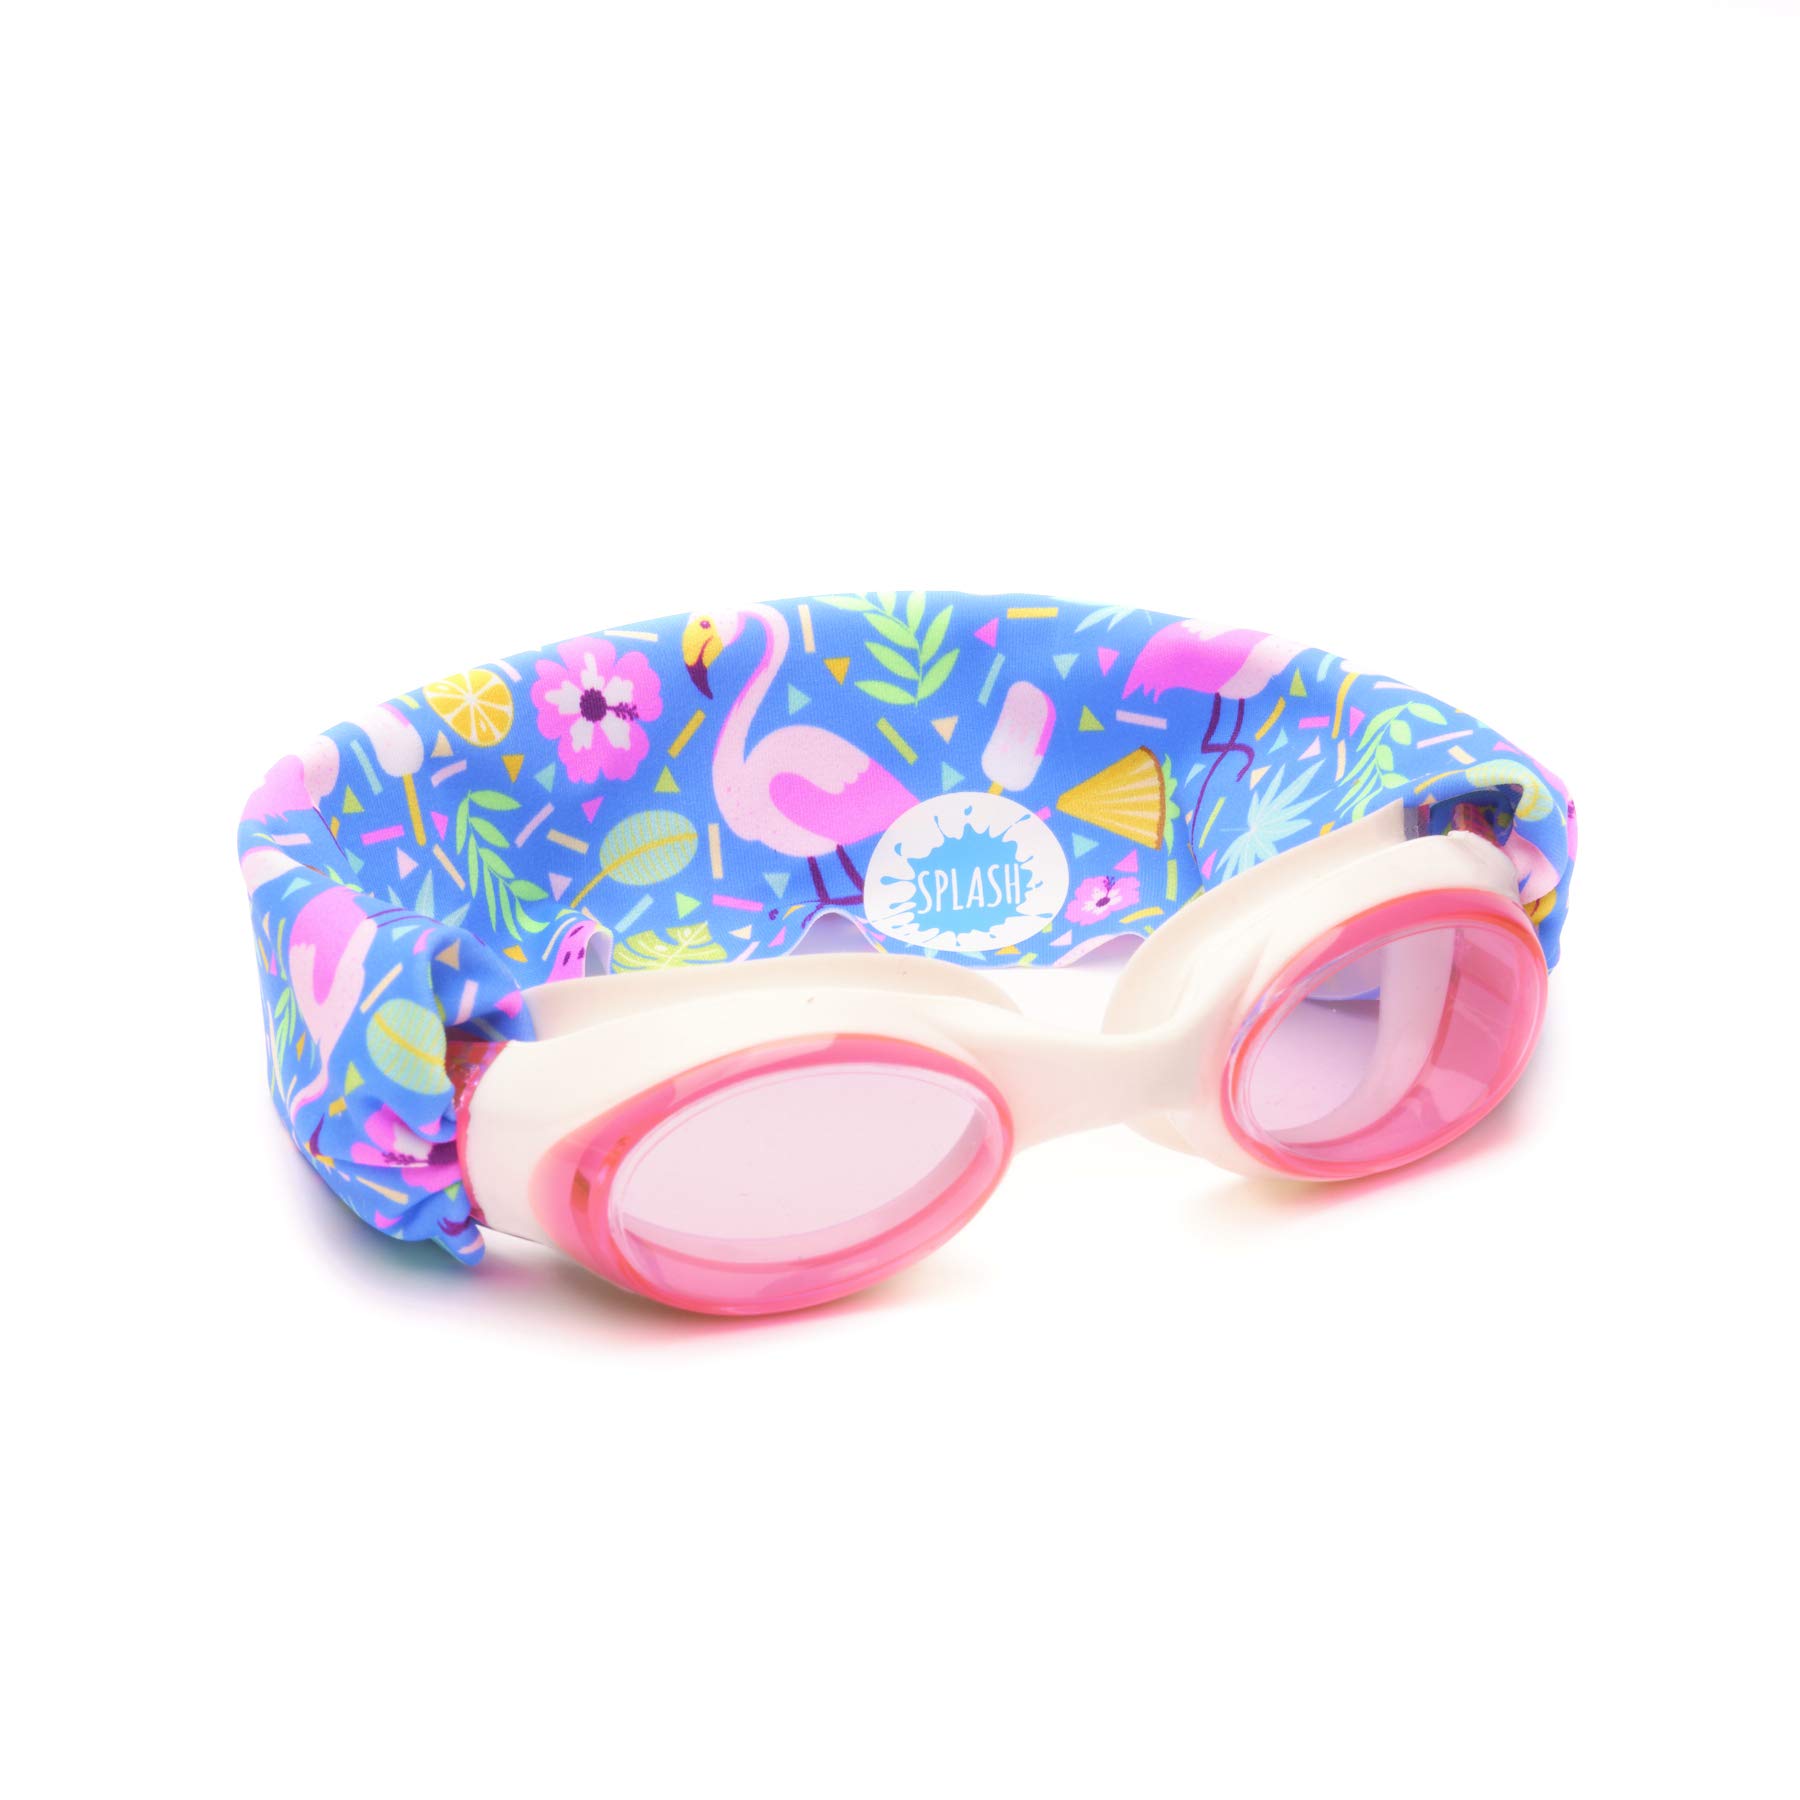 Splash Place SPLASH SWIM gOggLES with Fabric Strap - FLAMINgO POP  Fun, Fashionable, comfortable - Adult  Kids Swim goggles